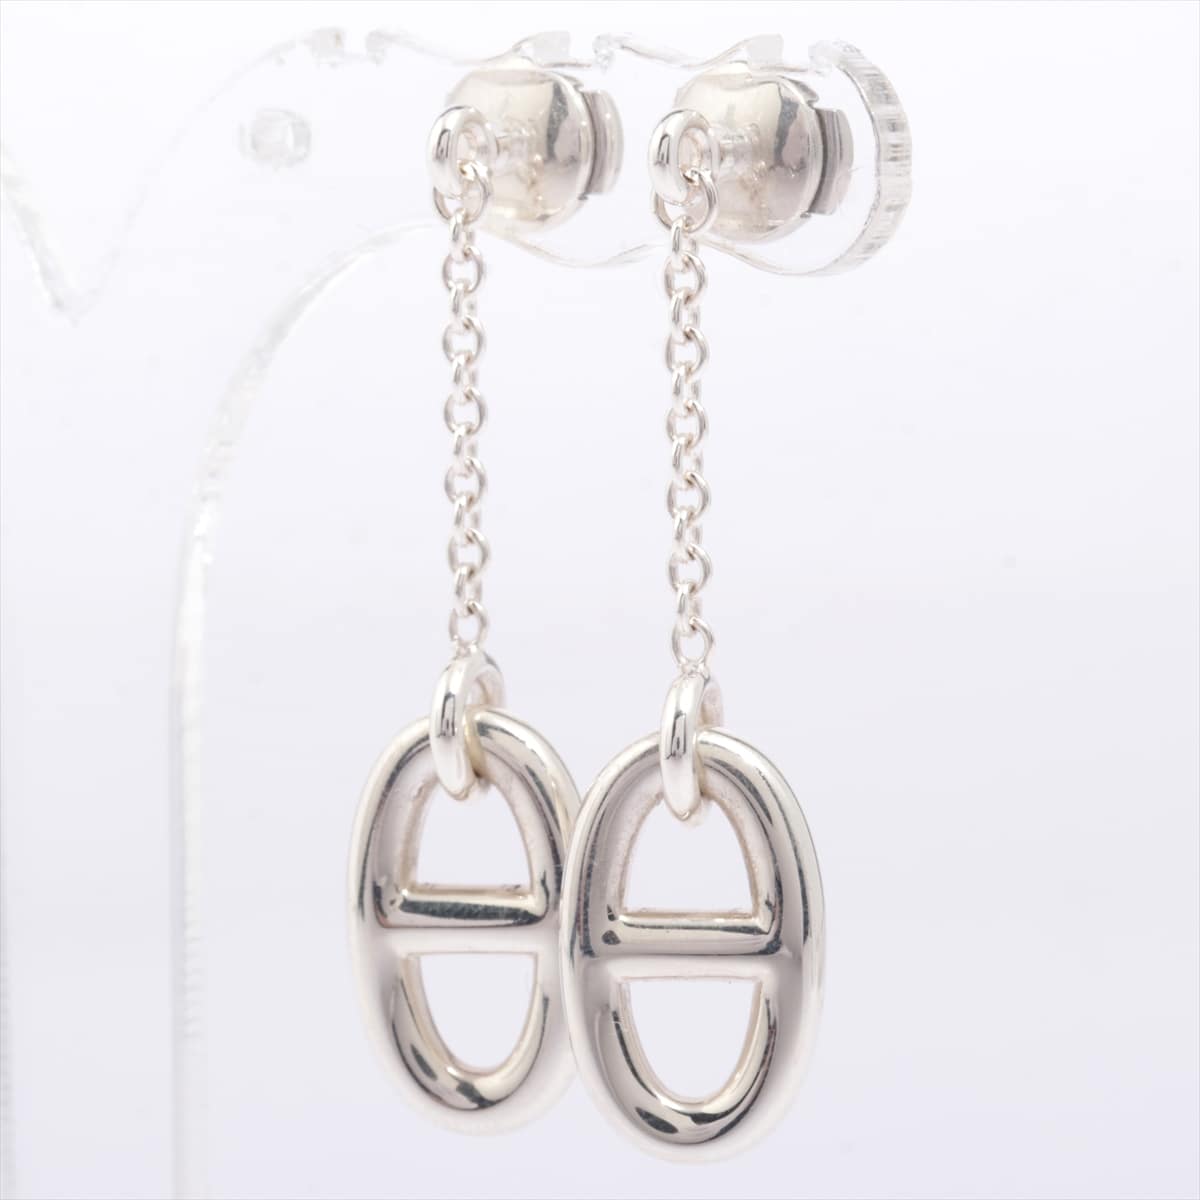 Hermès Chaîne d'Ancre Piercing jewelry (for both ears) 925 6.4g